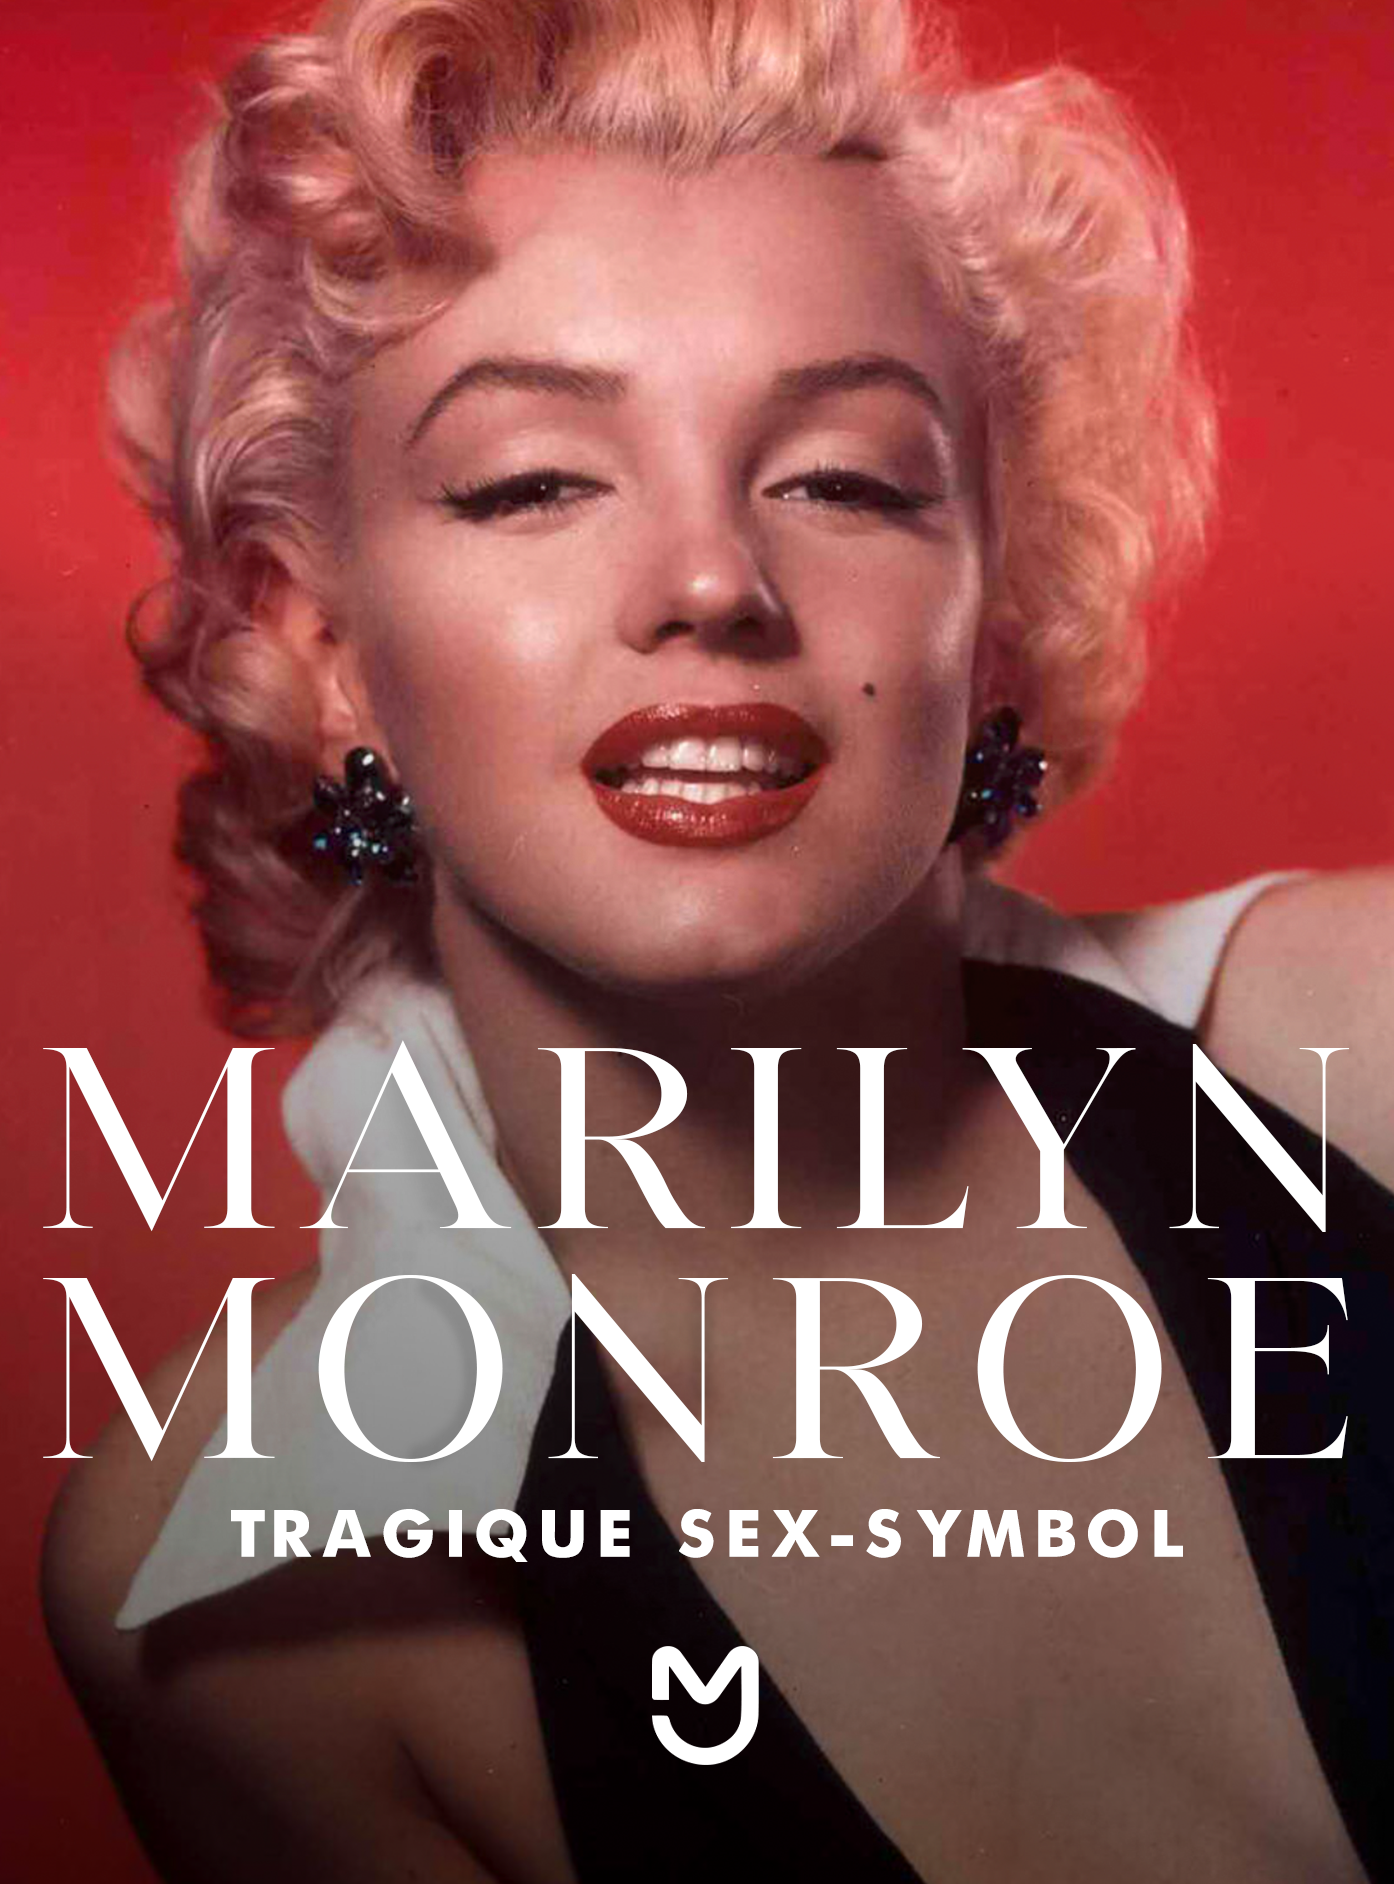 Marilyn Monroe, tragique sex-symbol